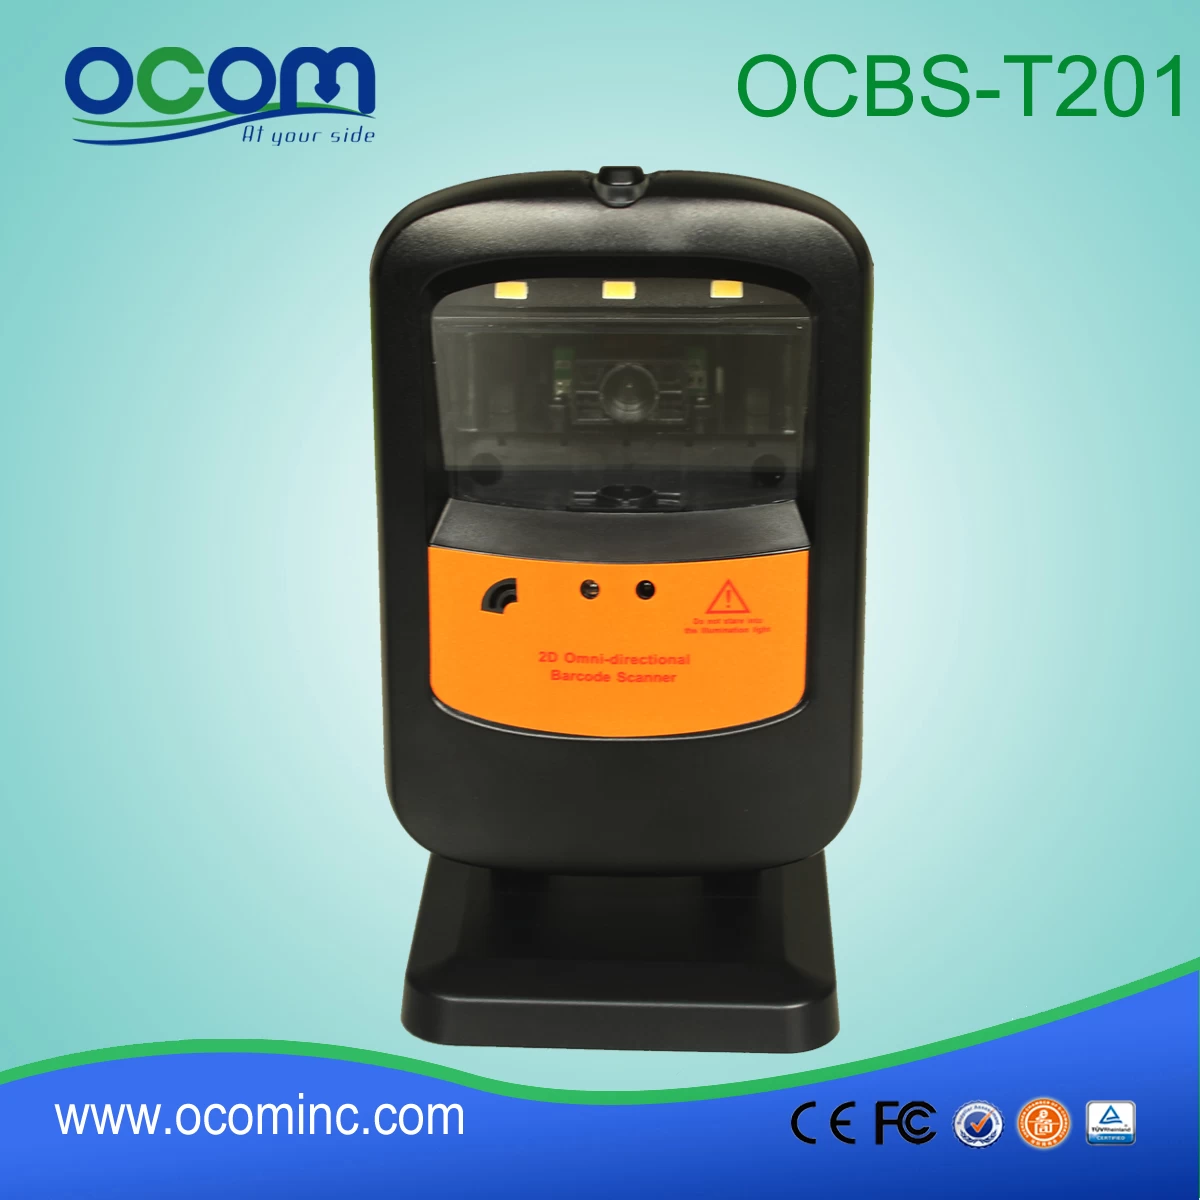 OCBS-T201:fixed mount barcode scanner mini usb, laser barcode scanner